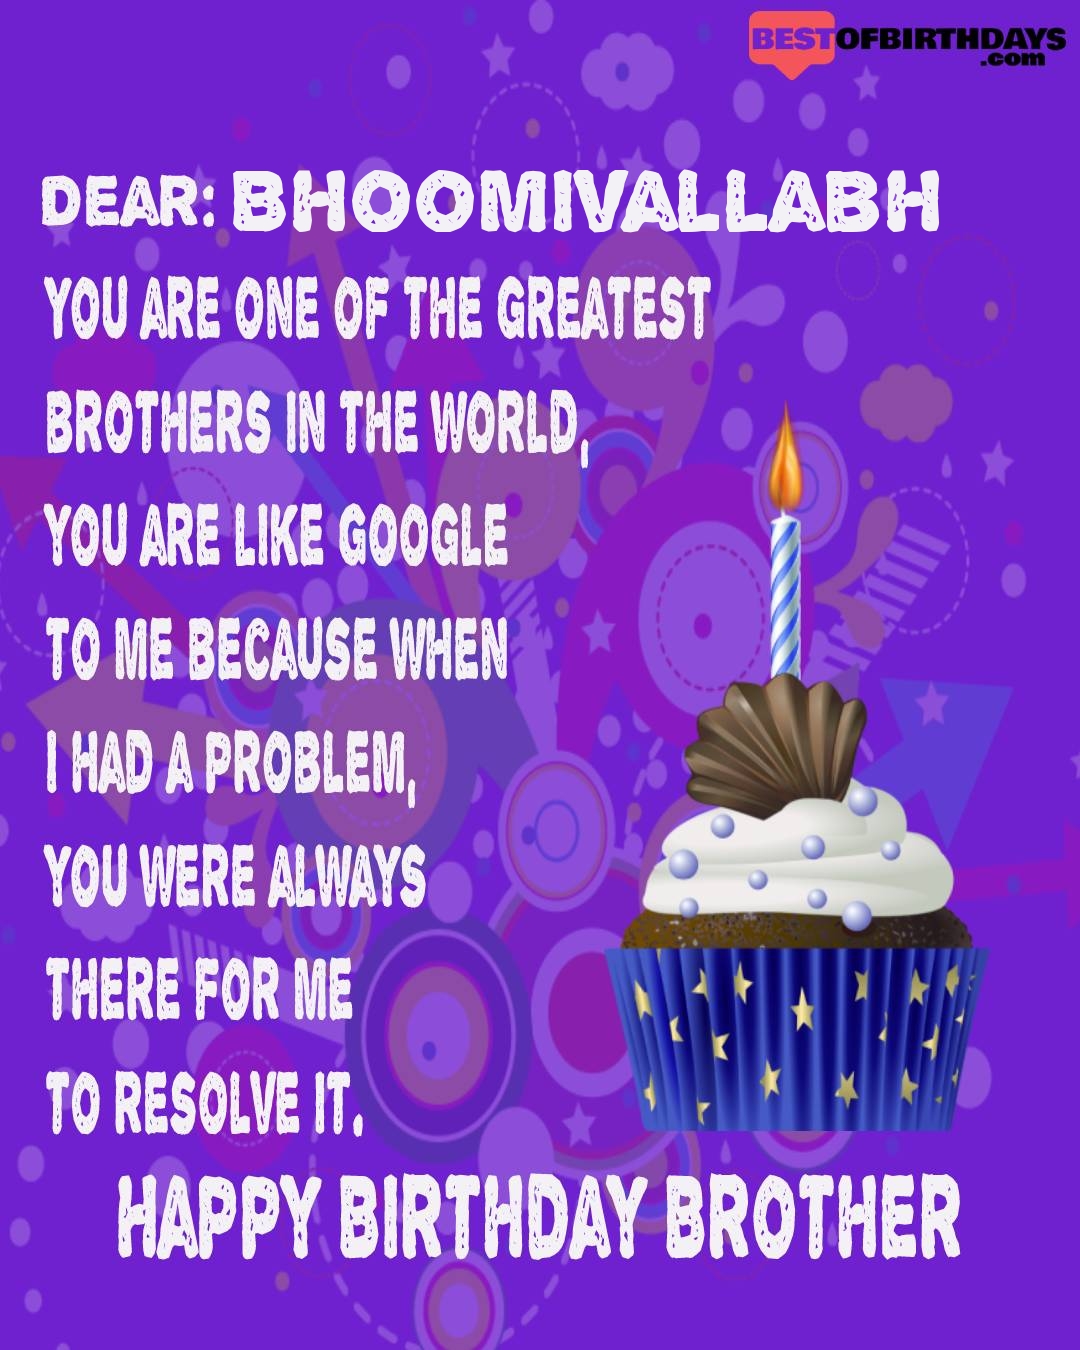 Happy birthday bhoomivallabh bhai brother bro